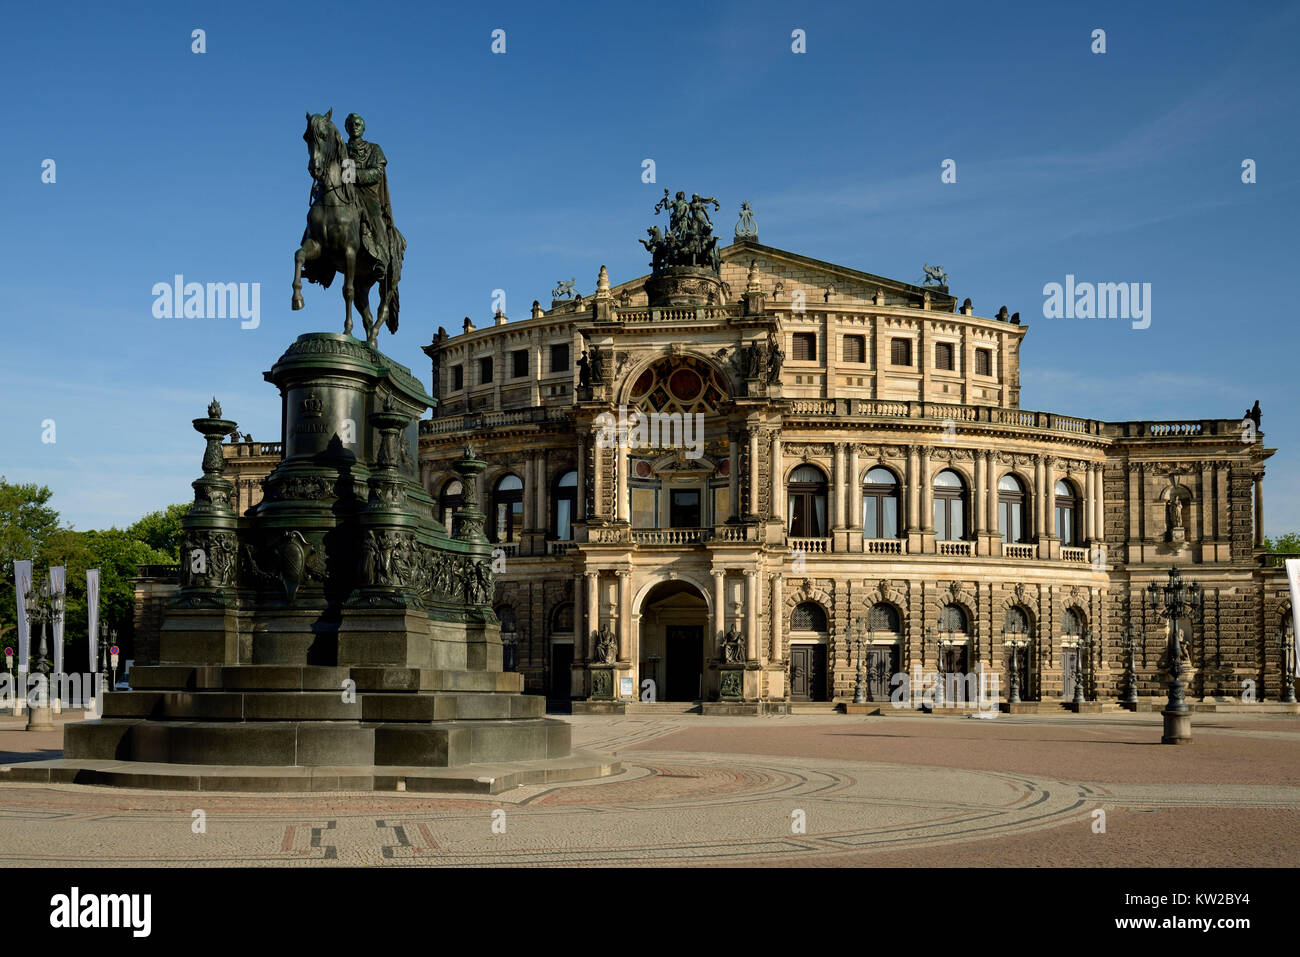 Dresda, monumento re Johann e Semperoper sulla piazza del teatro, , Denkmal König Johann und Semperoper auf dem Theaterplatz Foto Stock